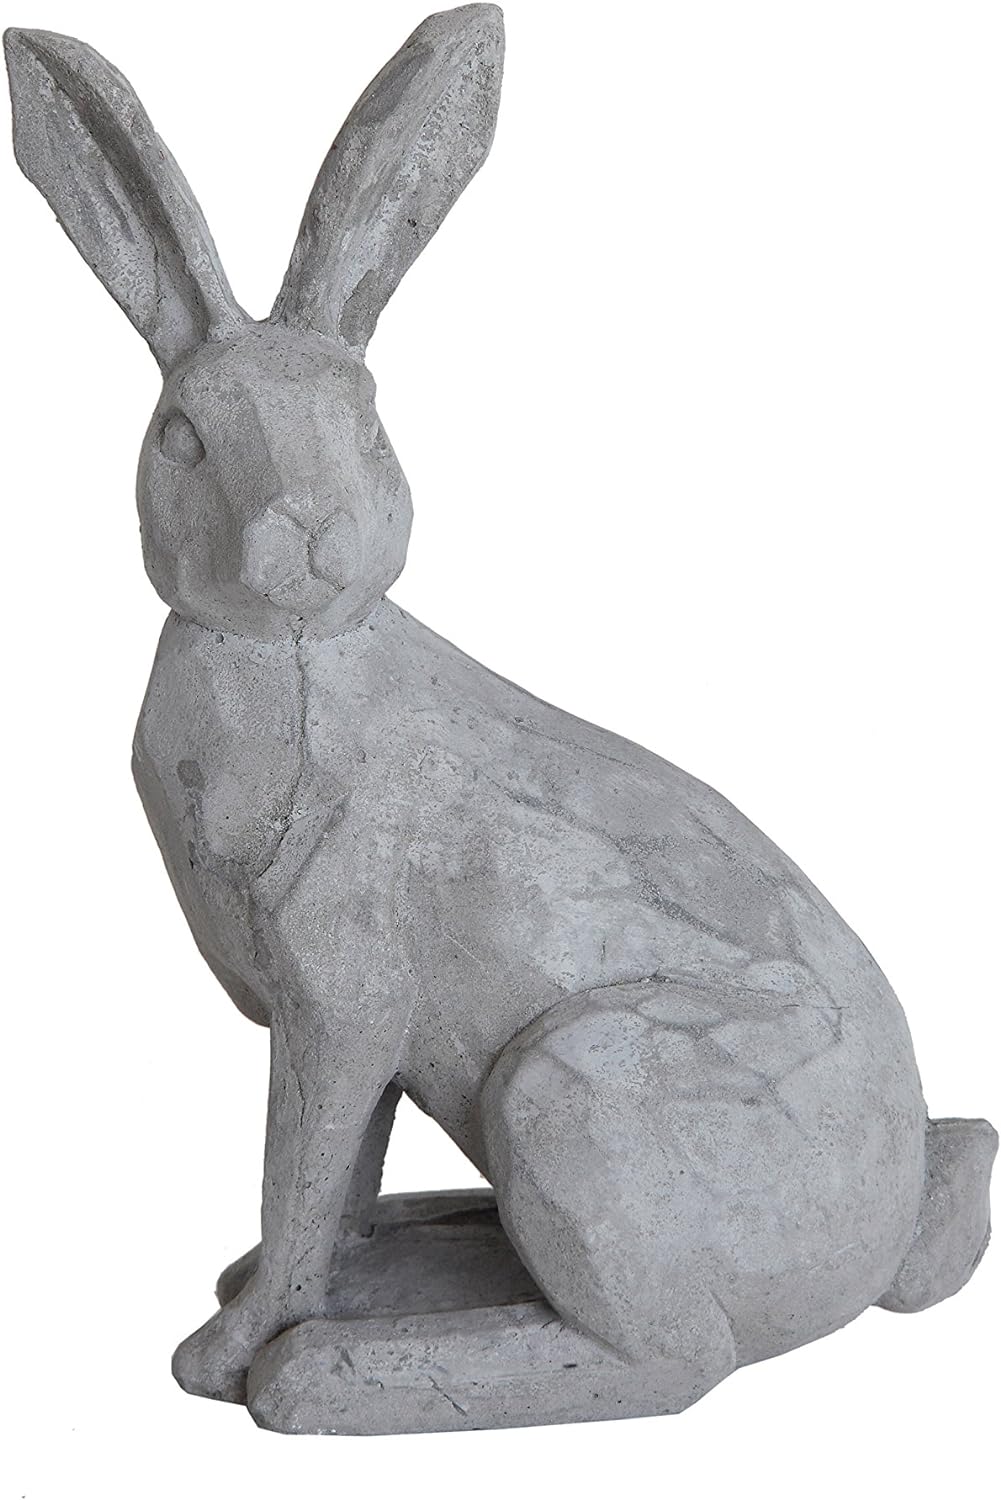 Cement Rabbit Figurine